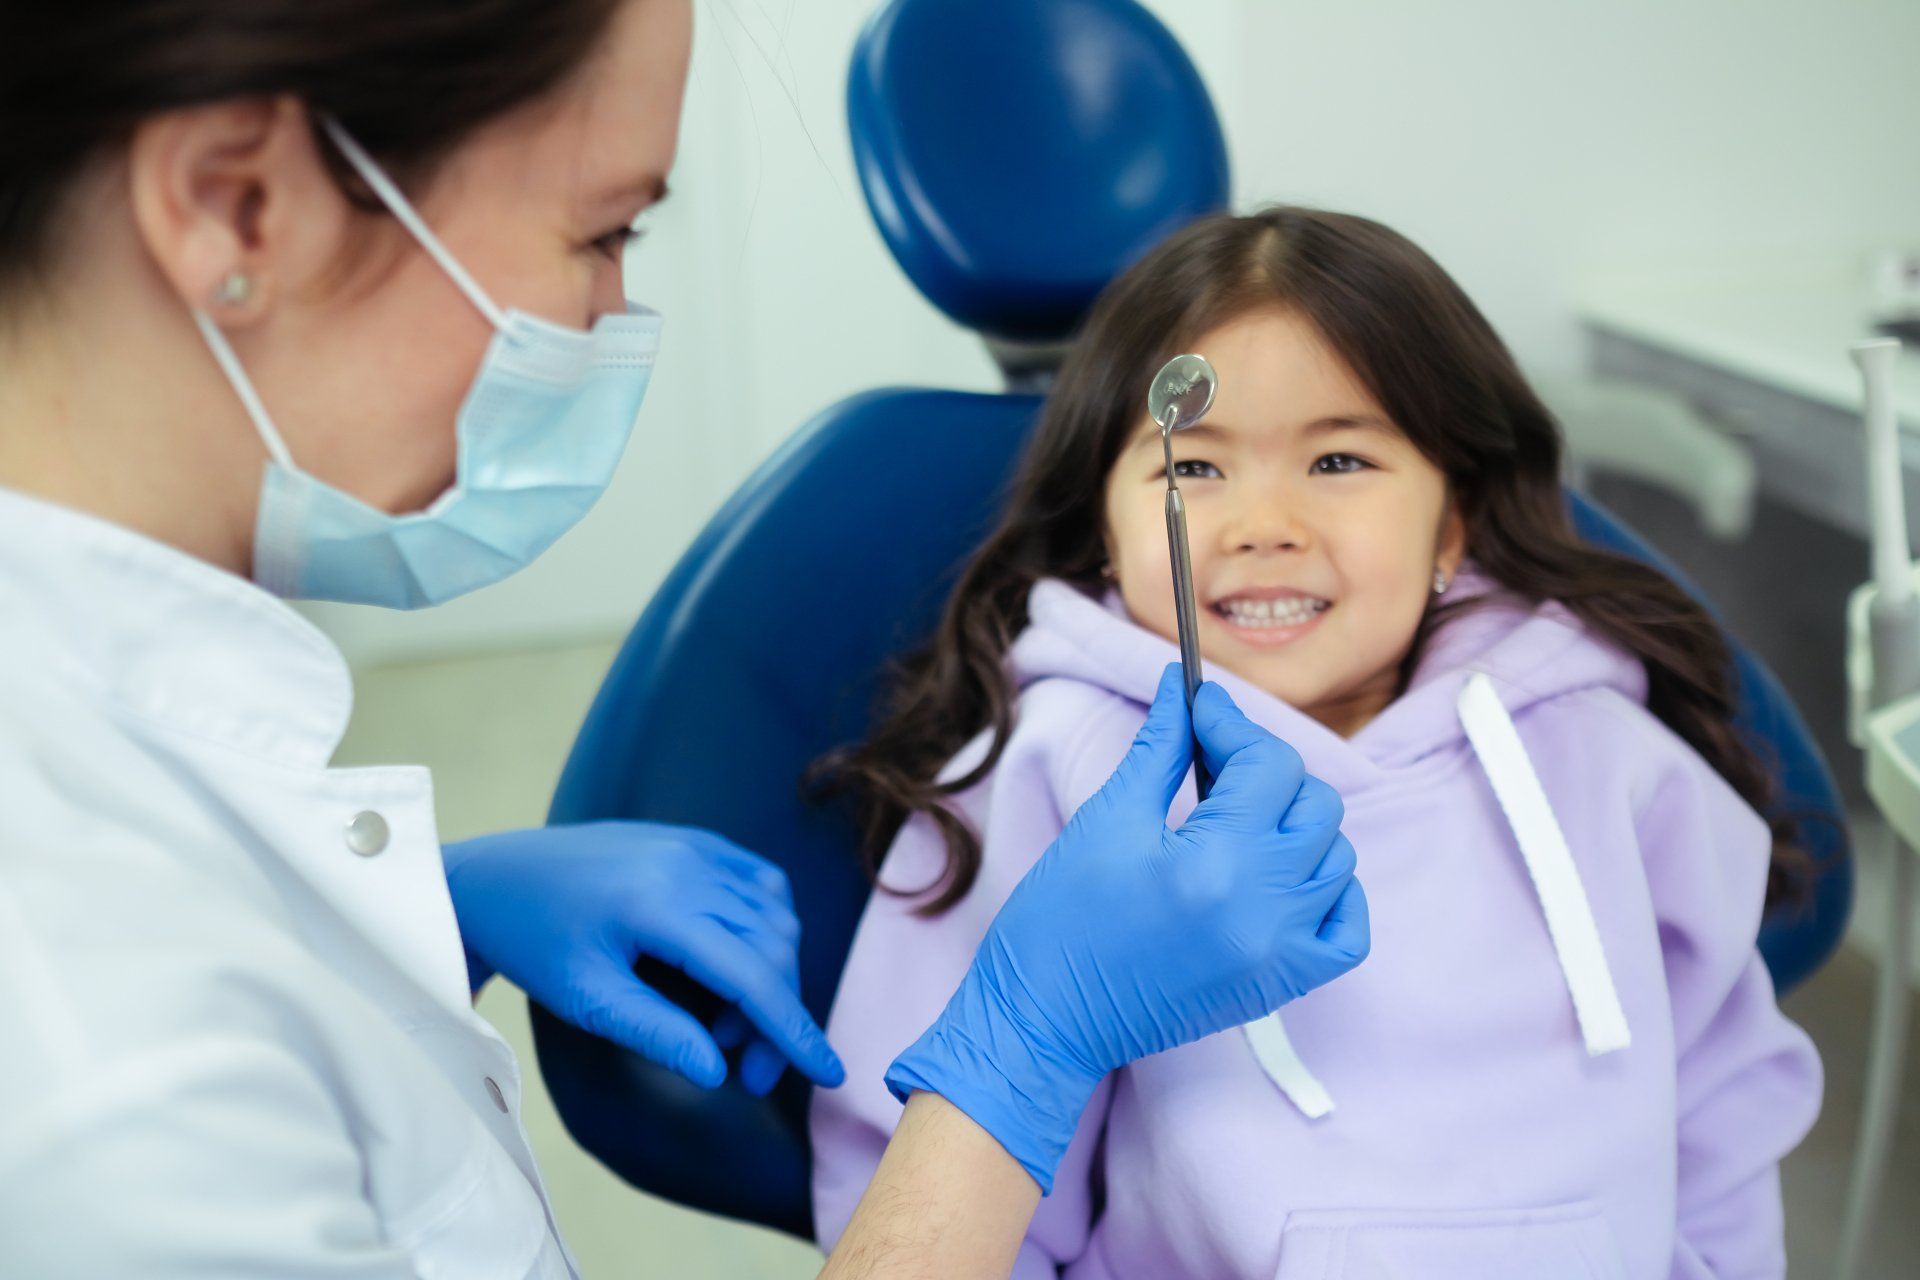 Dentist showing child a dental instrument